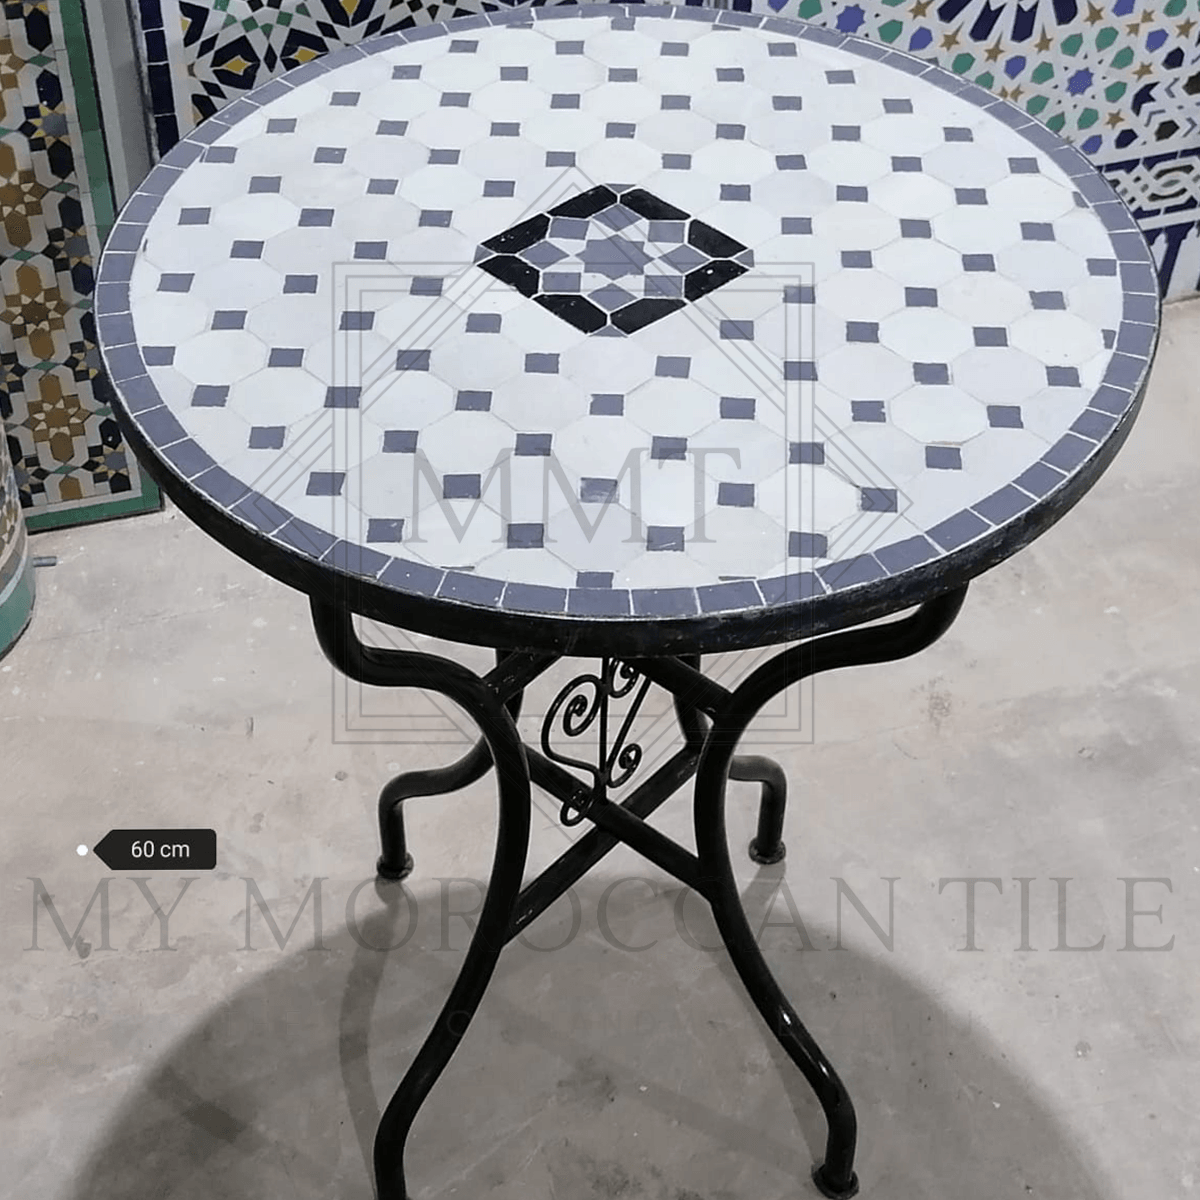 Handmade Moroccan Mosaic Table 2188-04